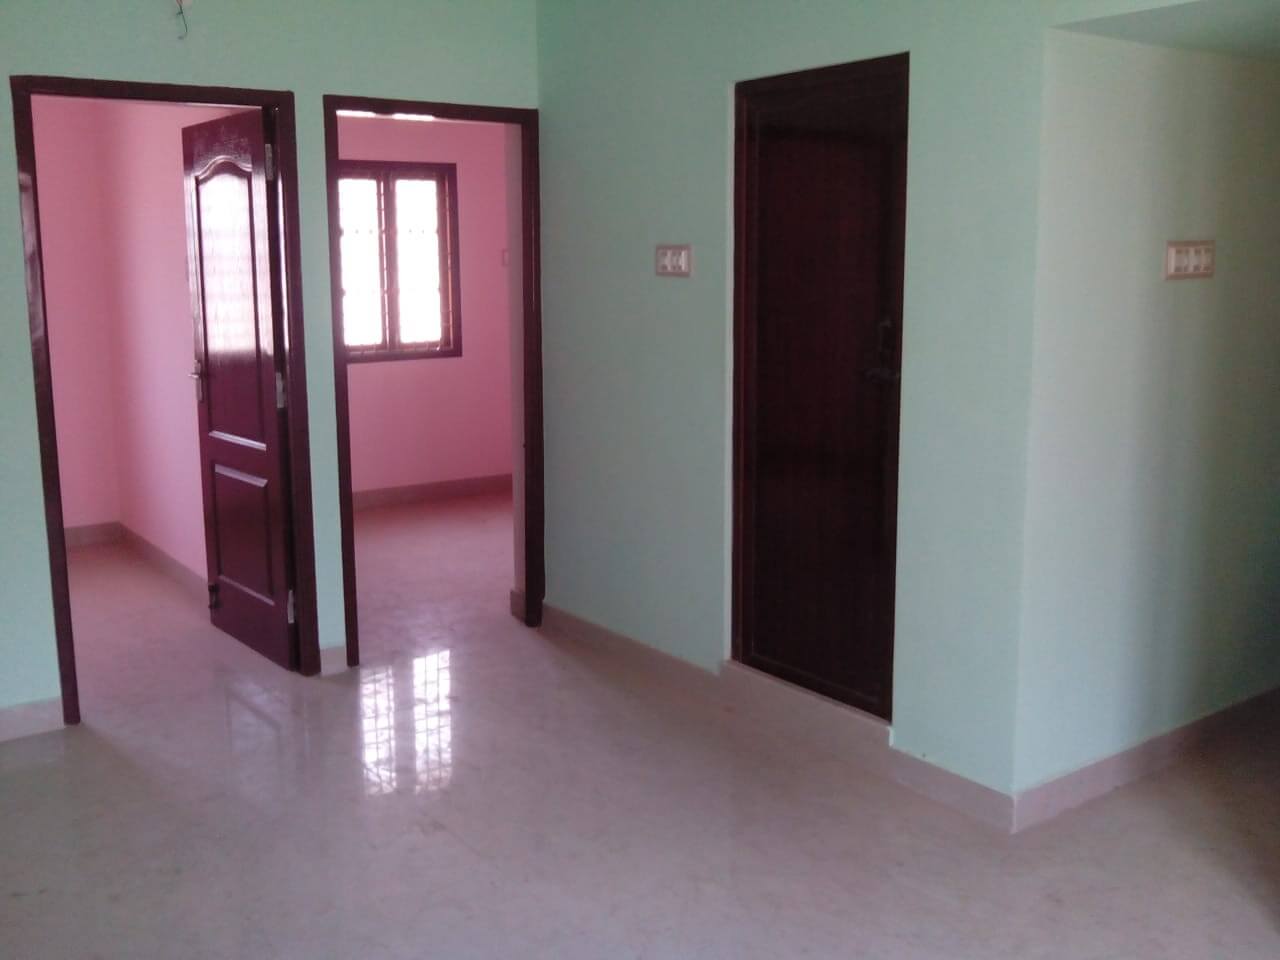 2 BHK Apartment / Flat for Rent 1100 Sq. Feet at Chennai, Seneerkupam